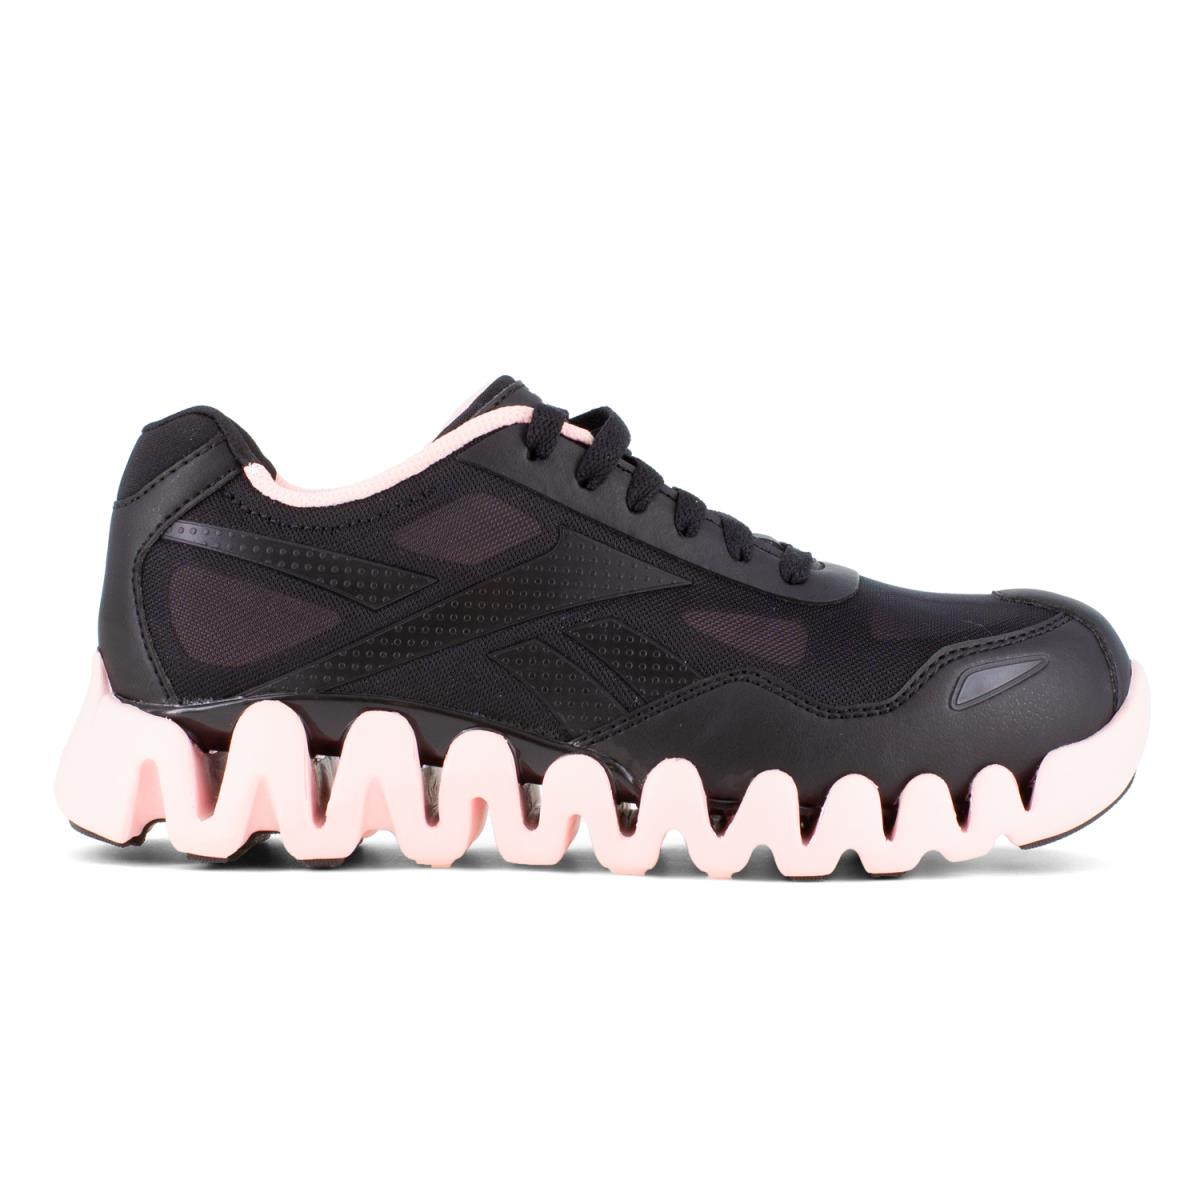 Reebok Womens Black/pink Mesh Work Shoes Zig Pulse Athletic CT W